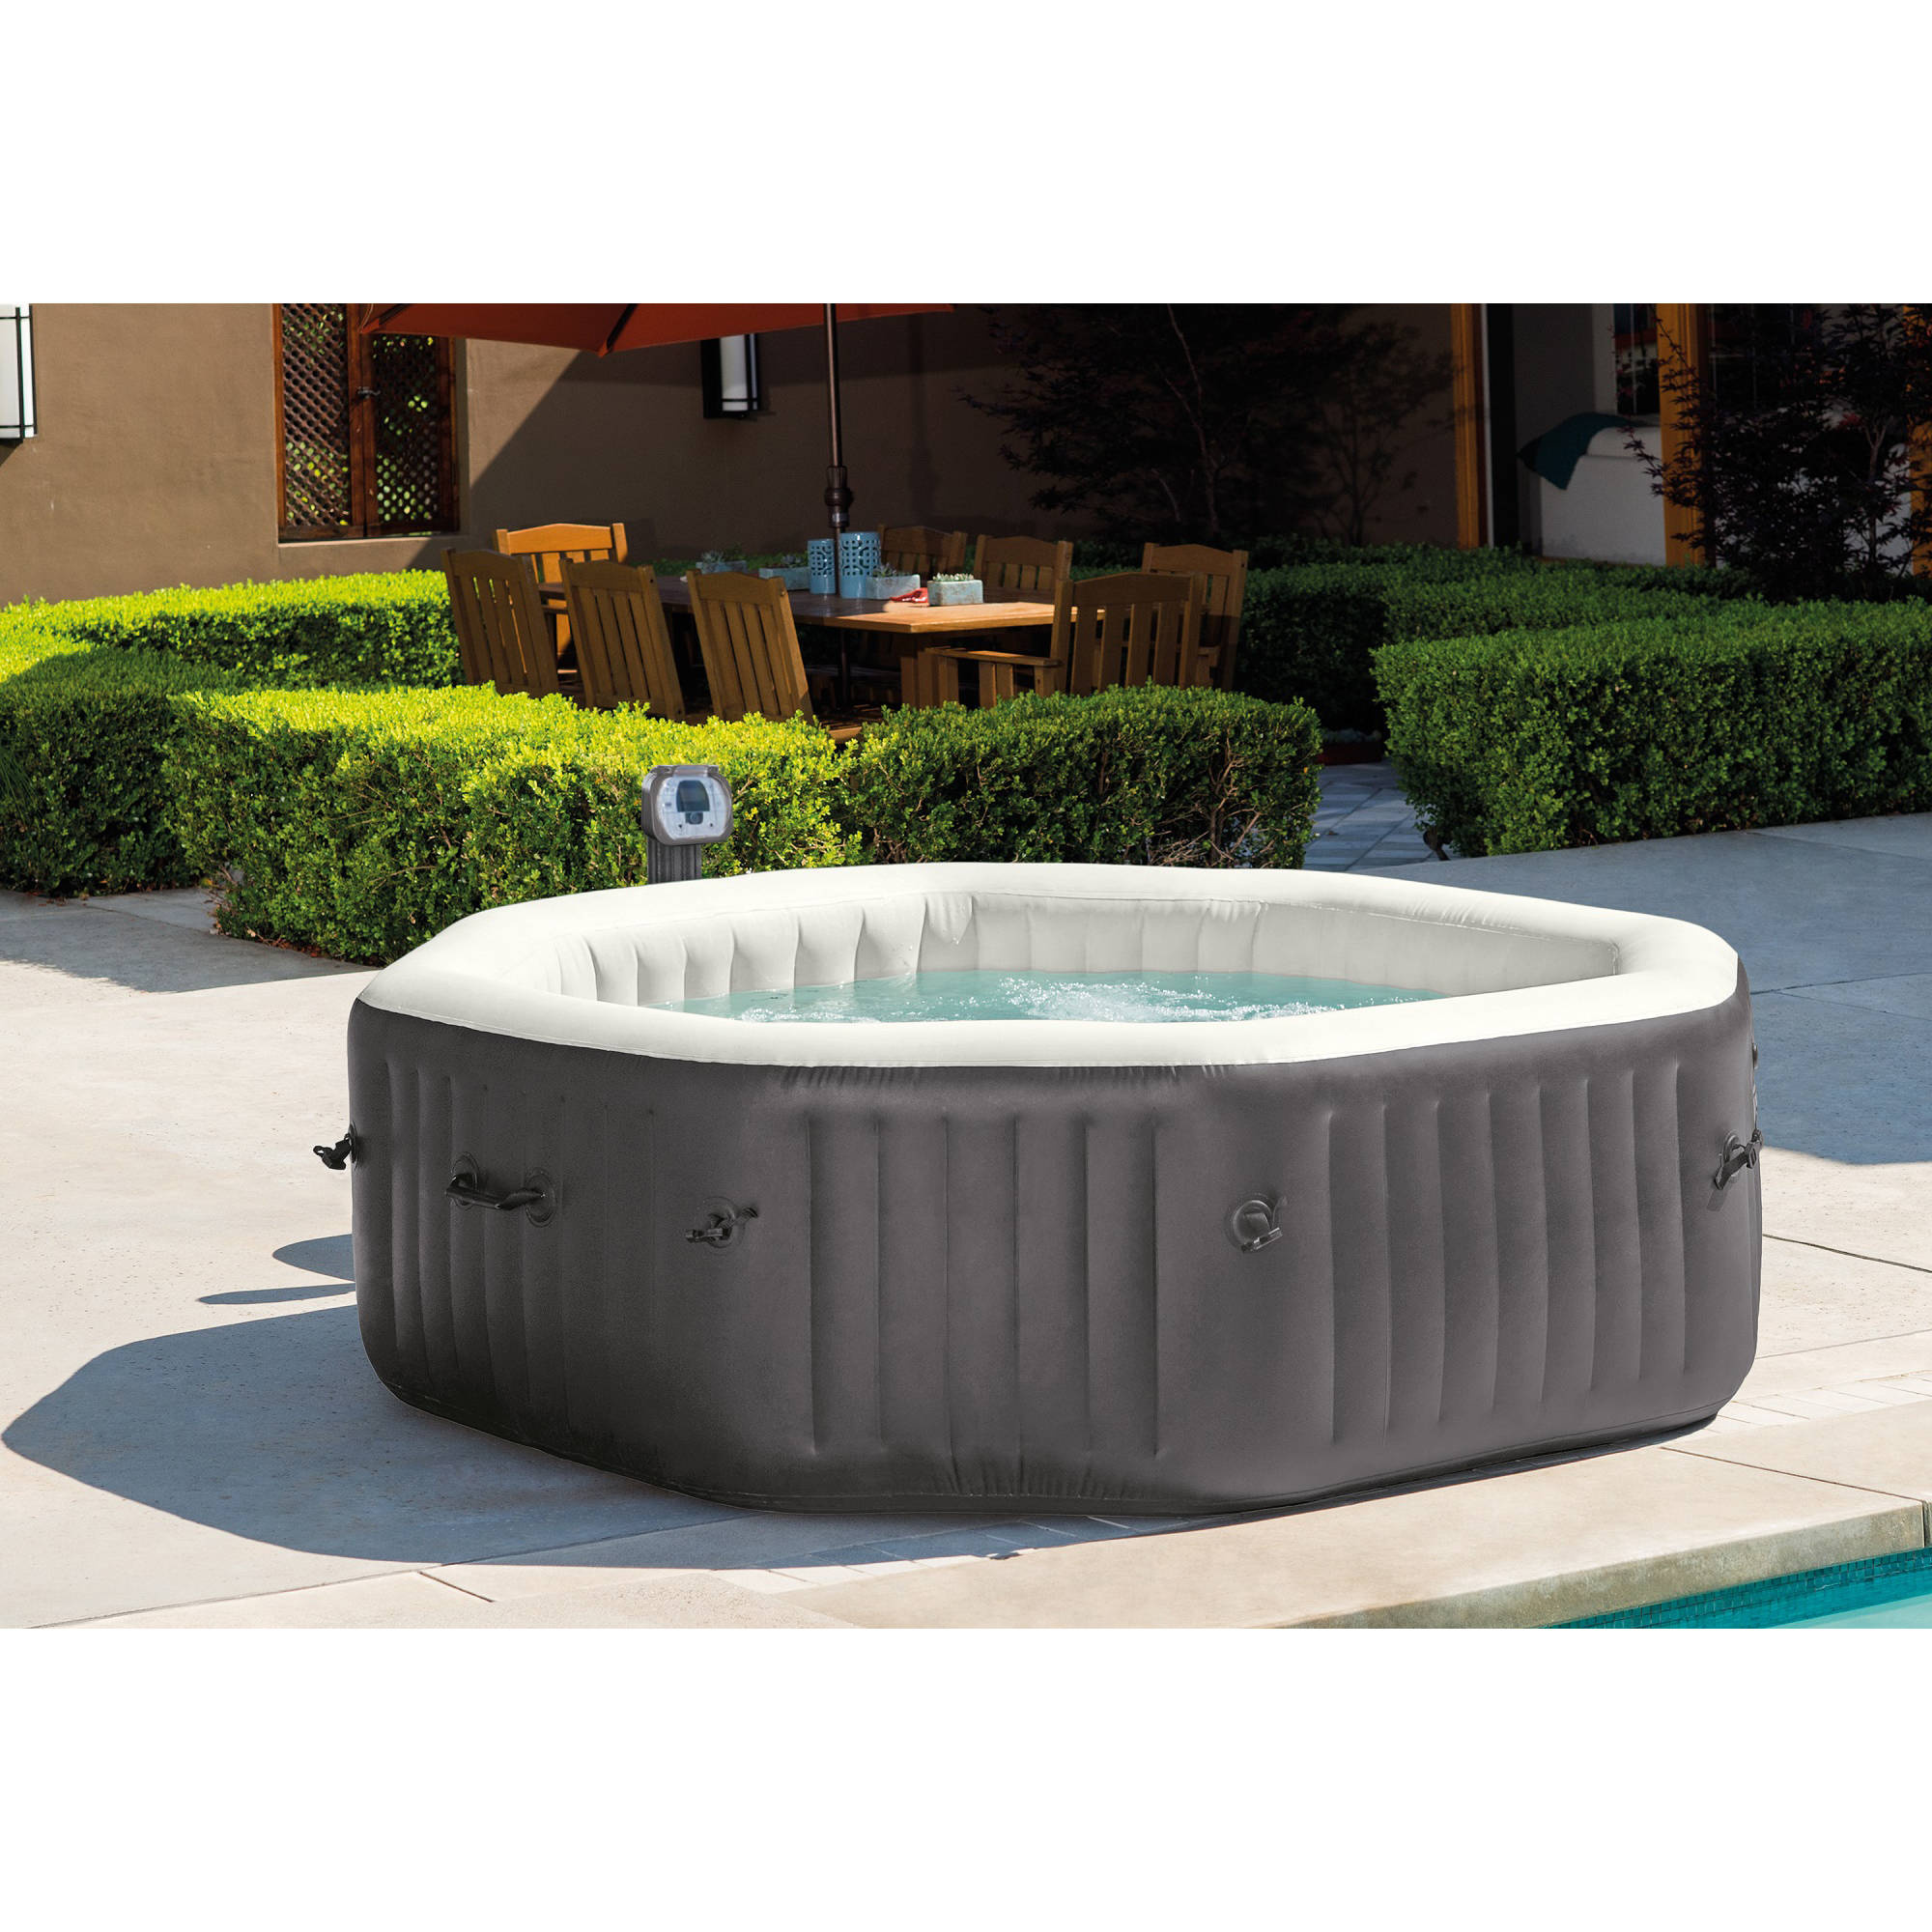 Intex inflatable hot tub review